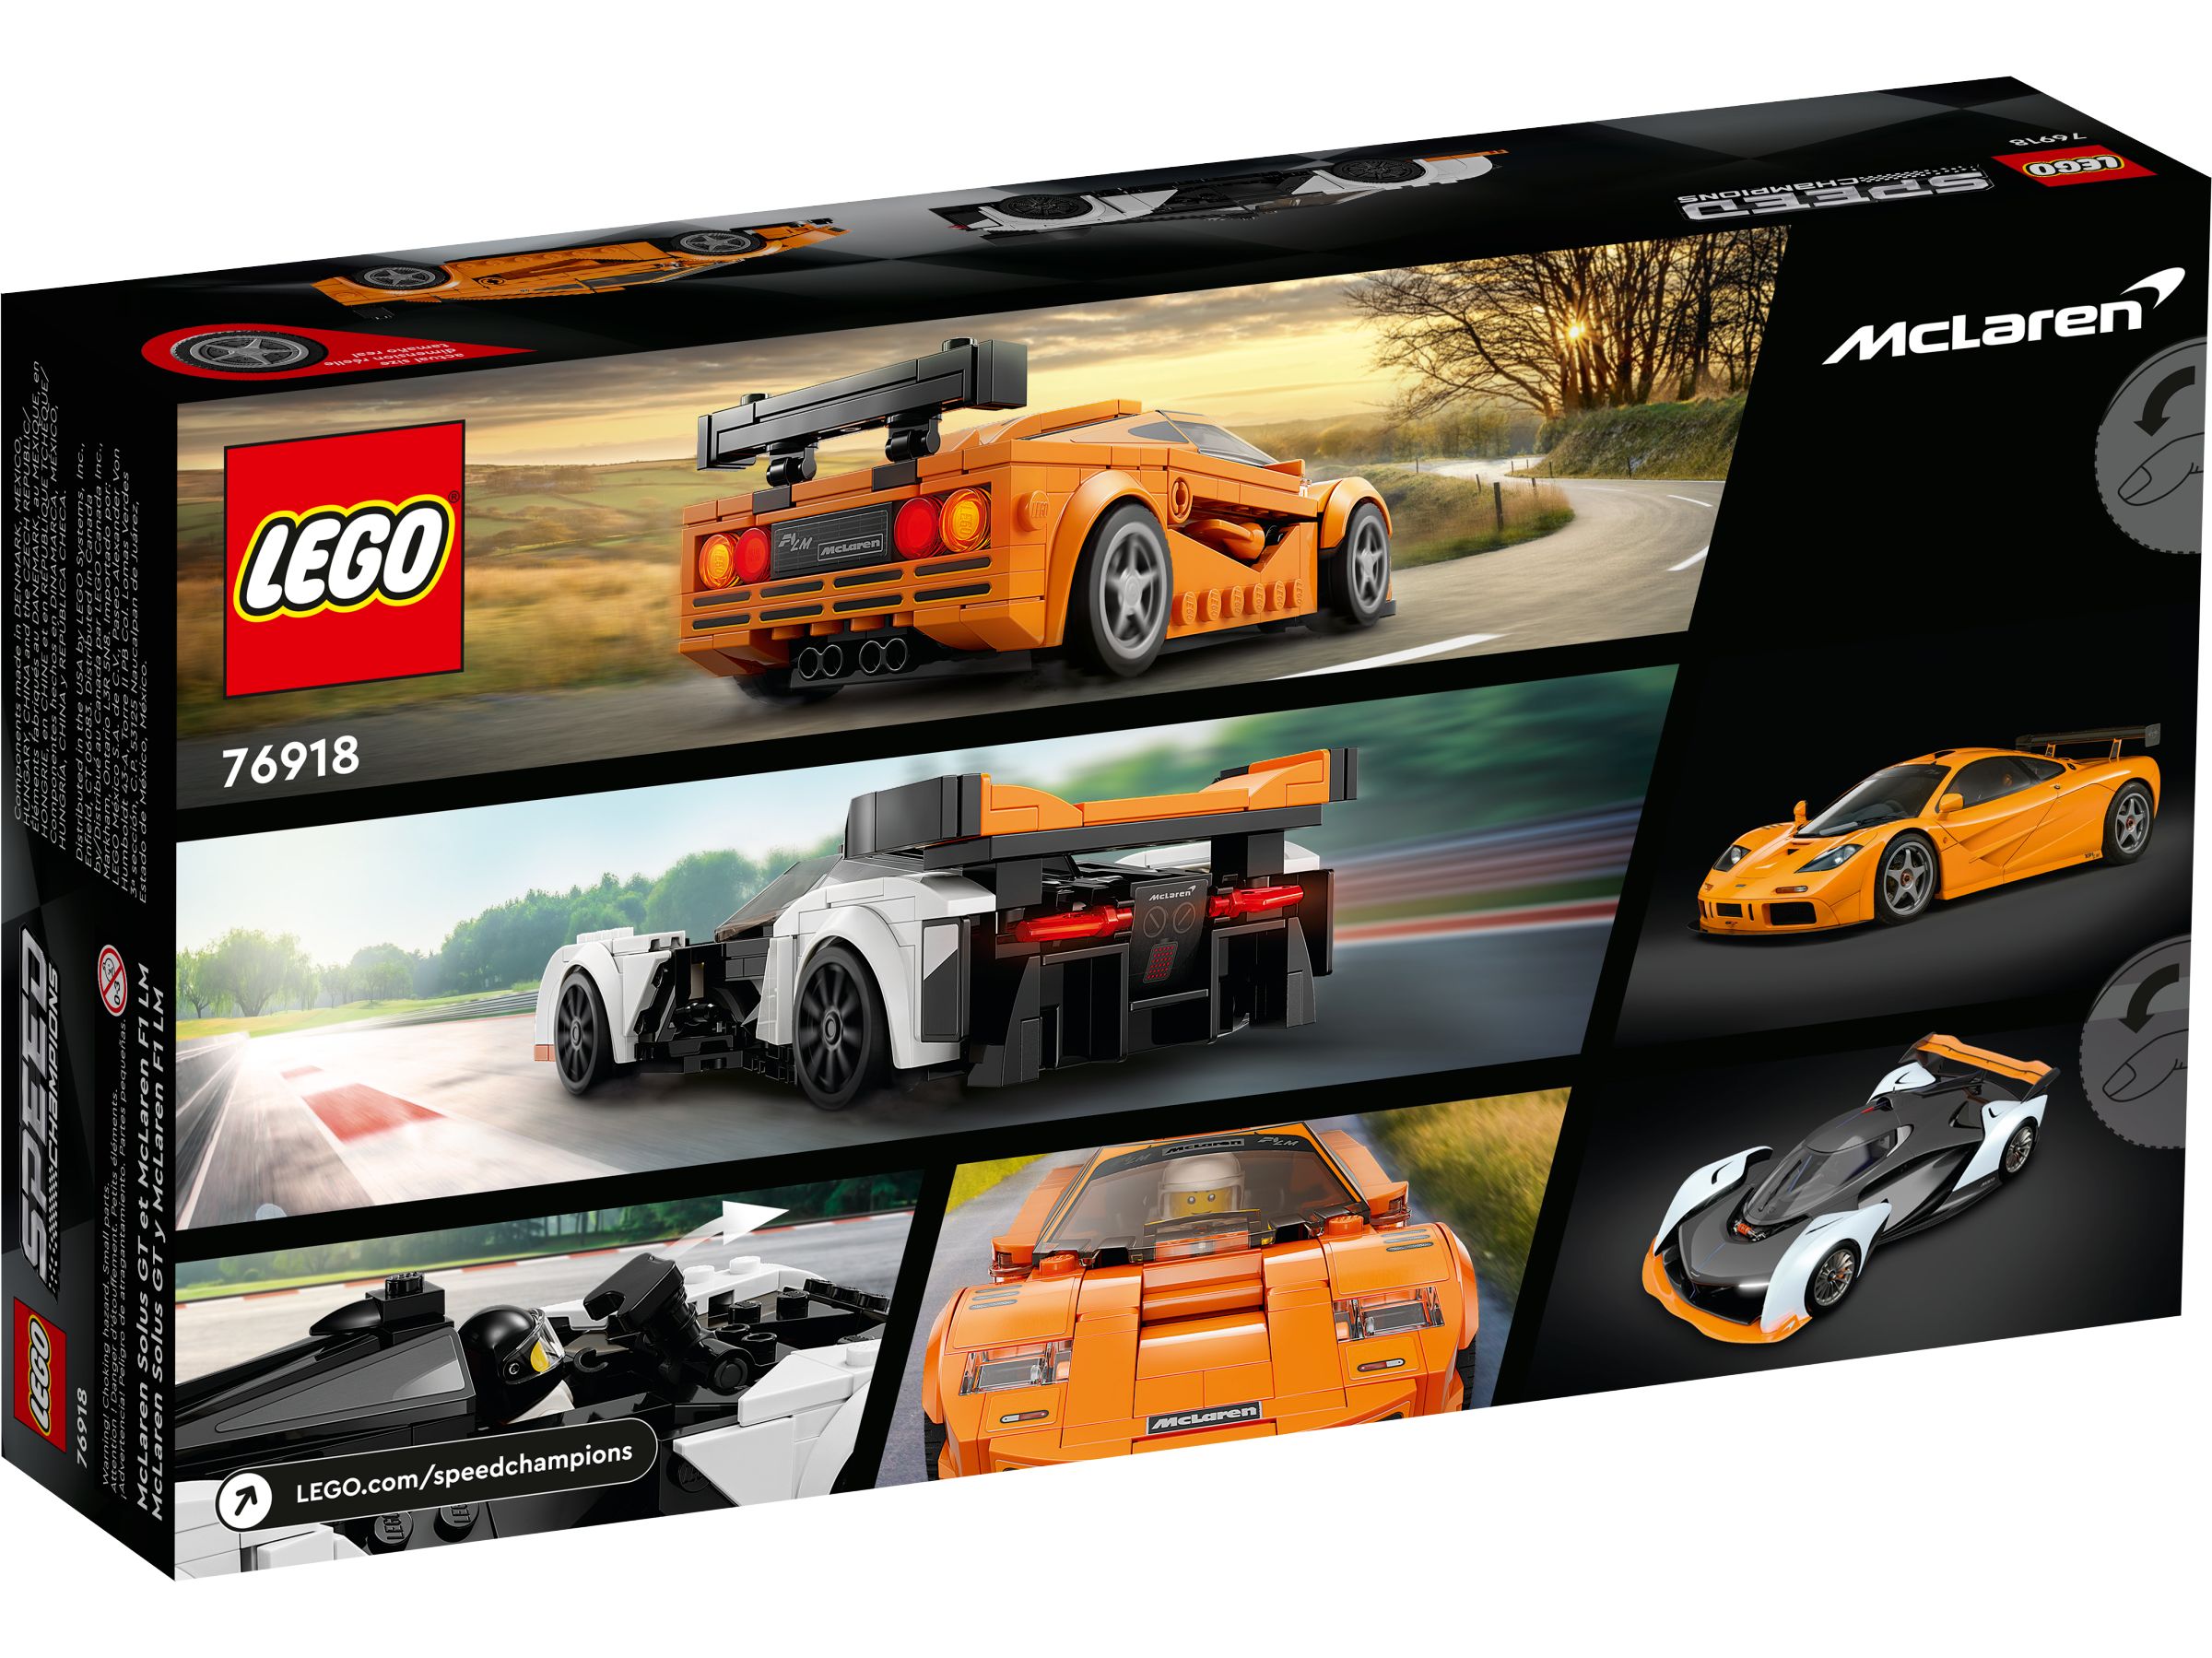 LEGO Speed Champions 76918 McLaren Solus GT & McLaren F1 LM LEGO_76918_alt8.jpg